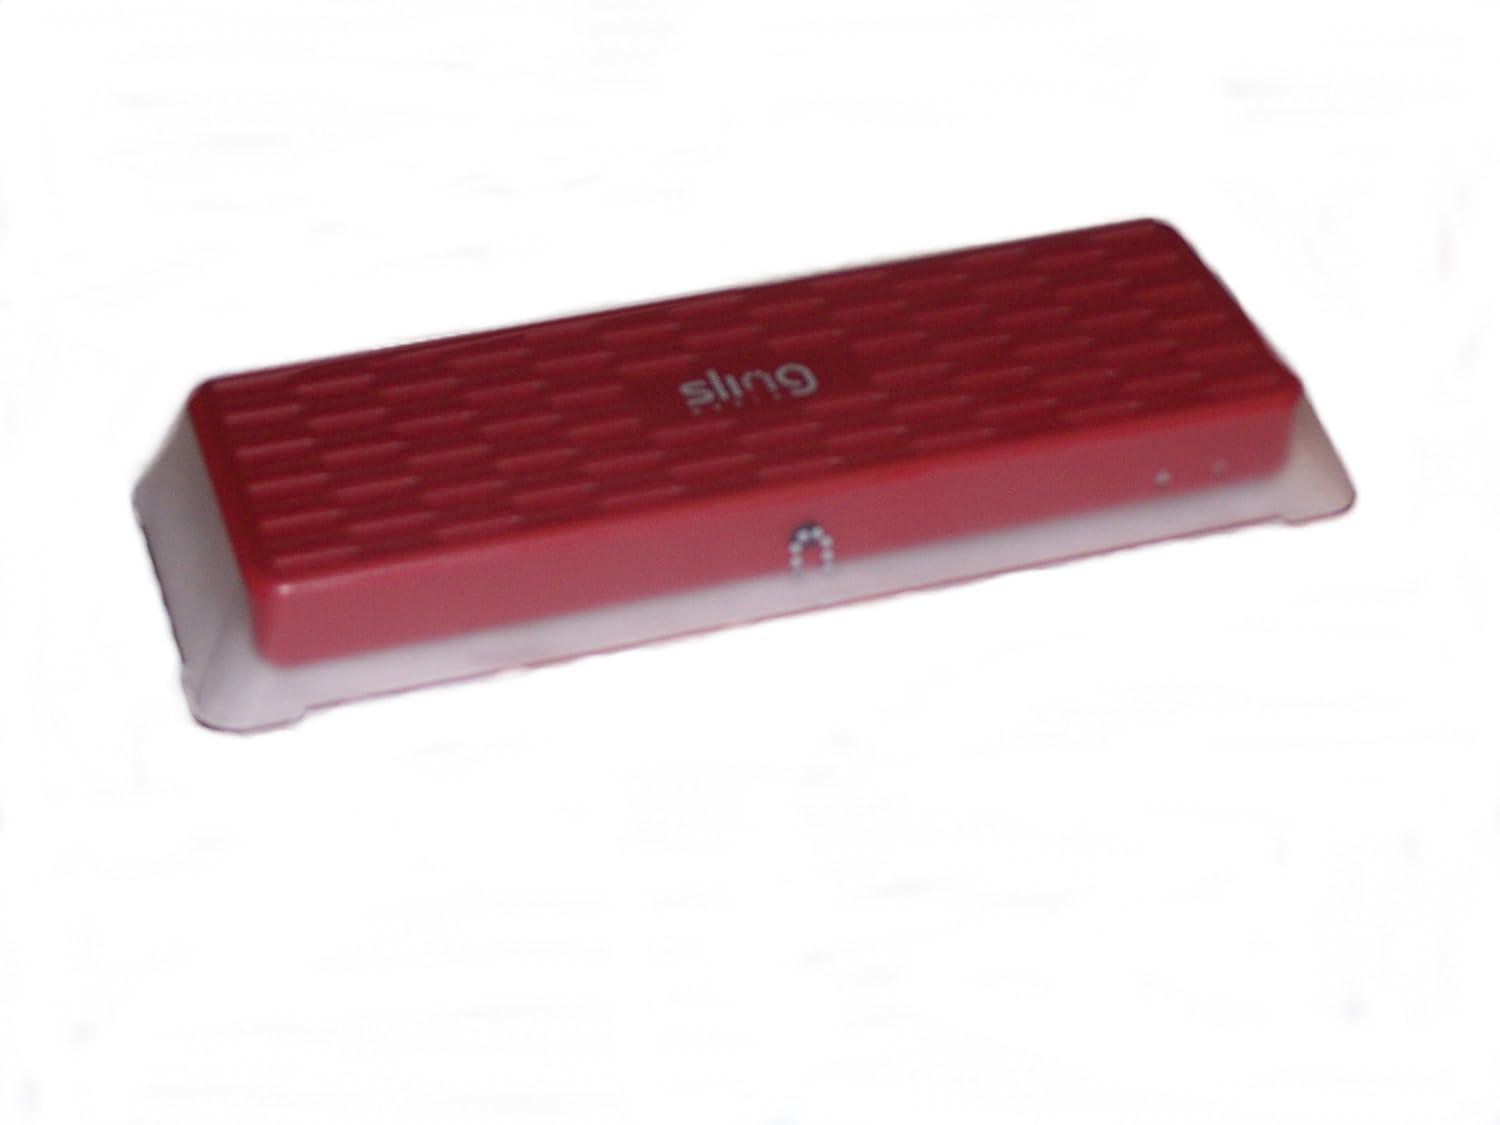 sling media slingbox pro (sb200-100)